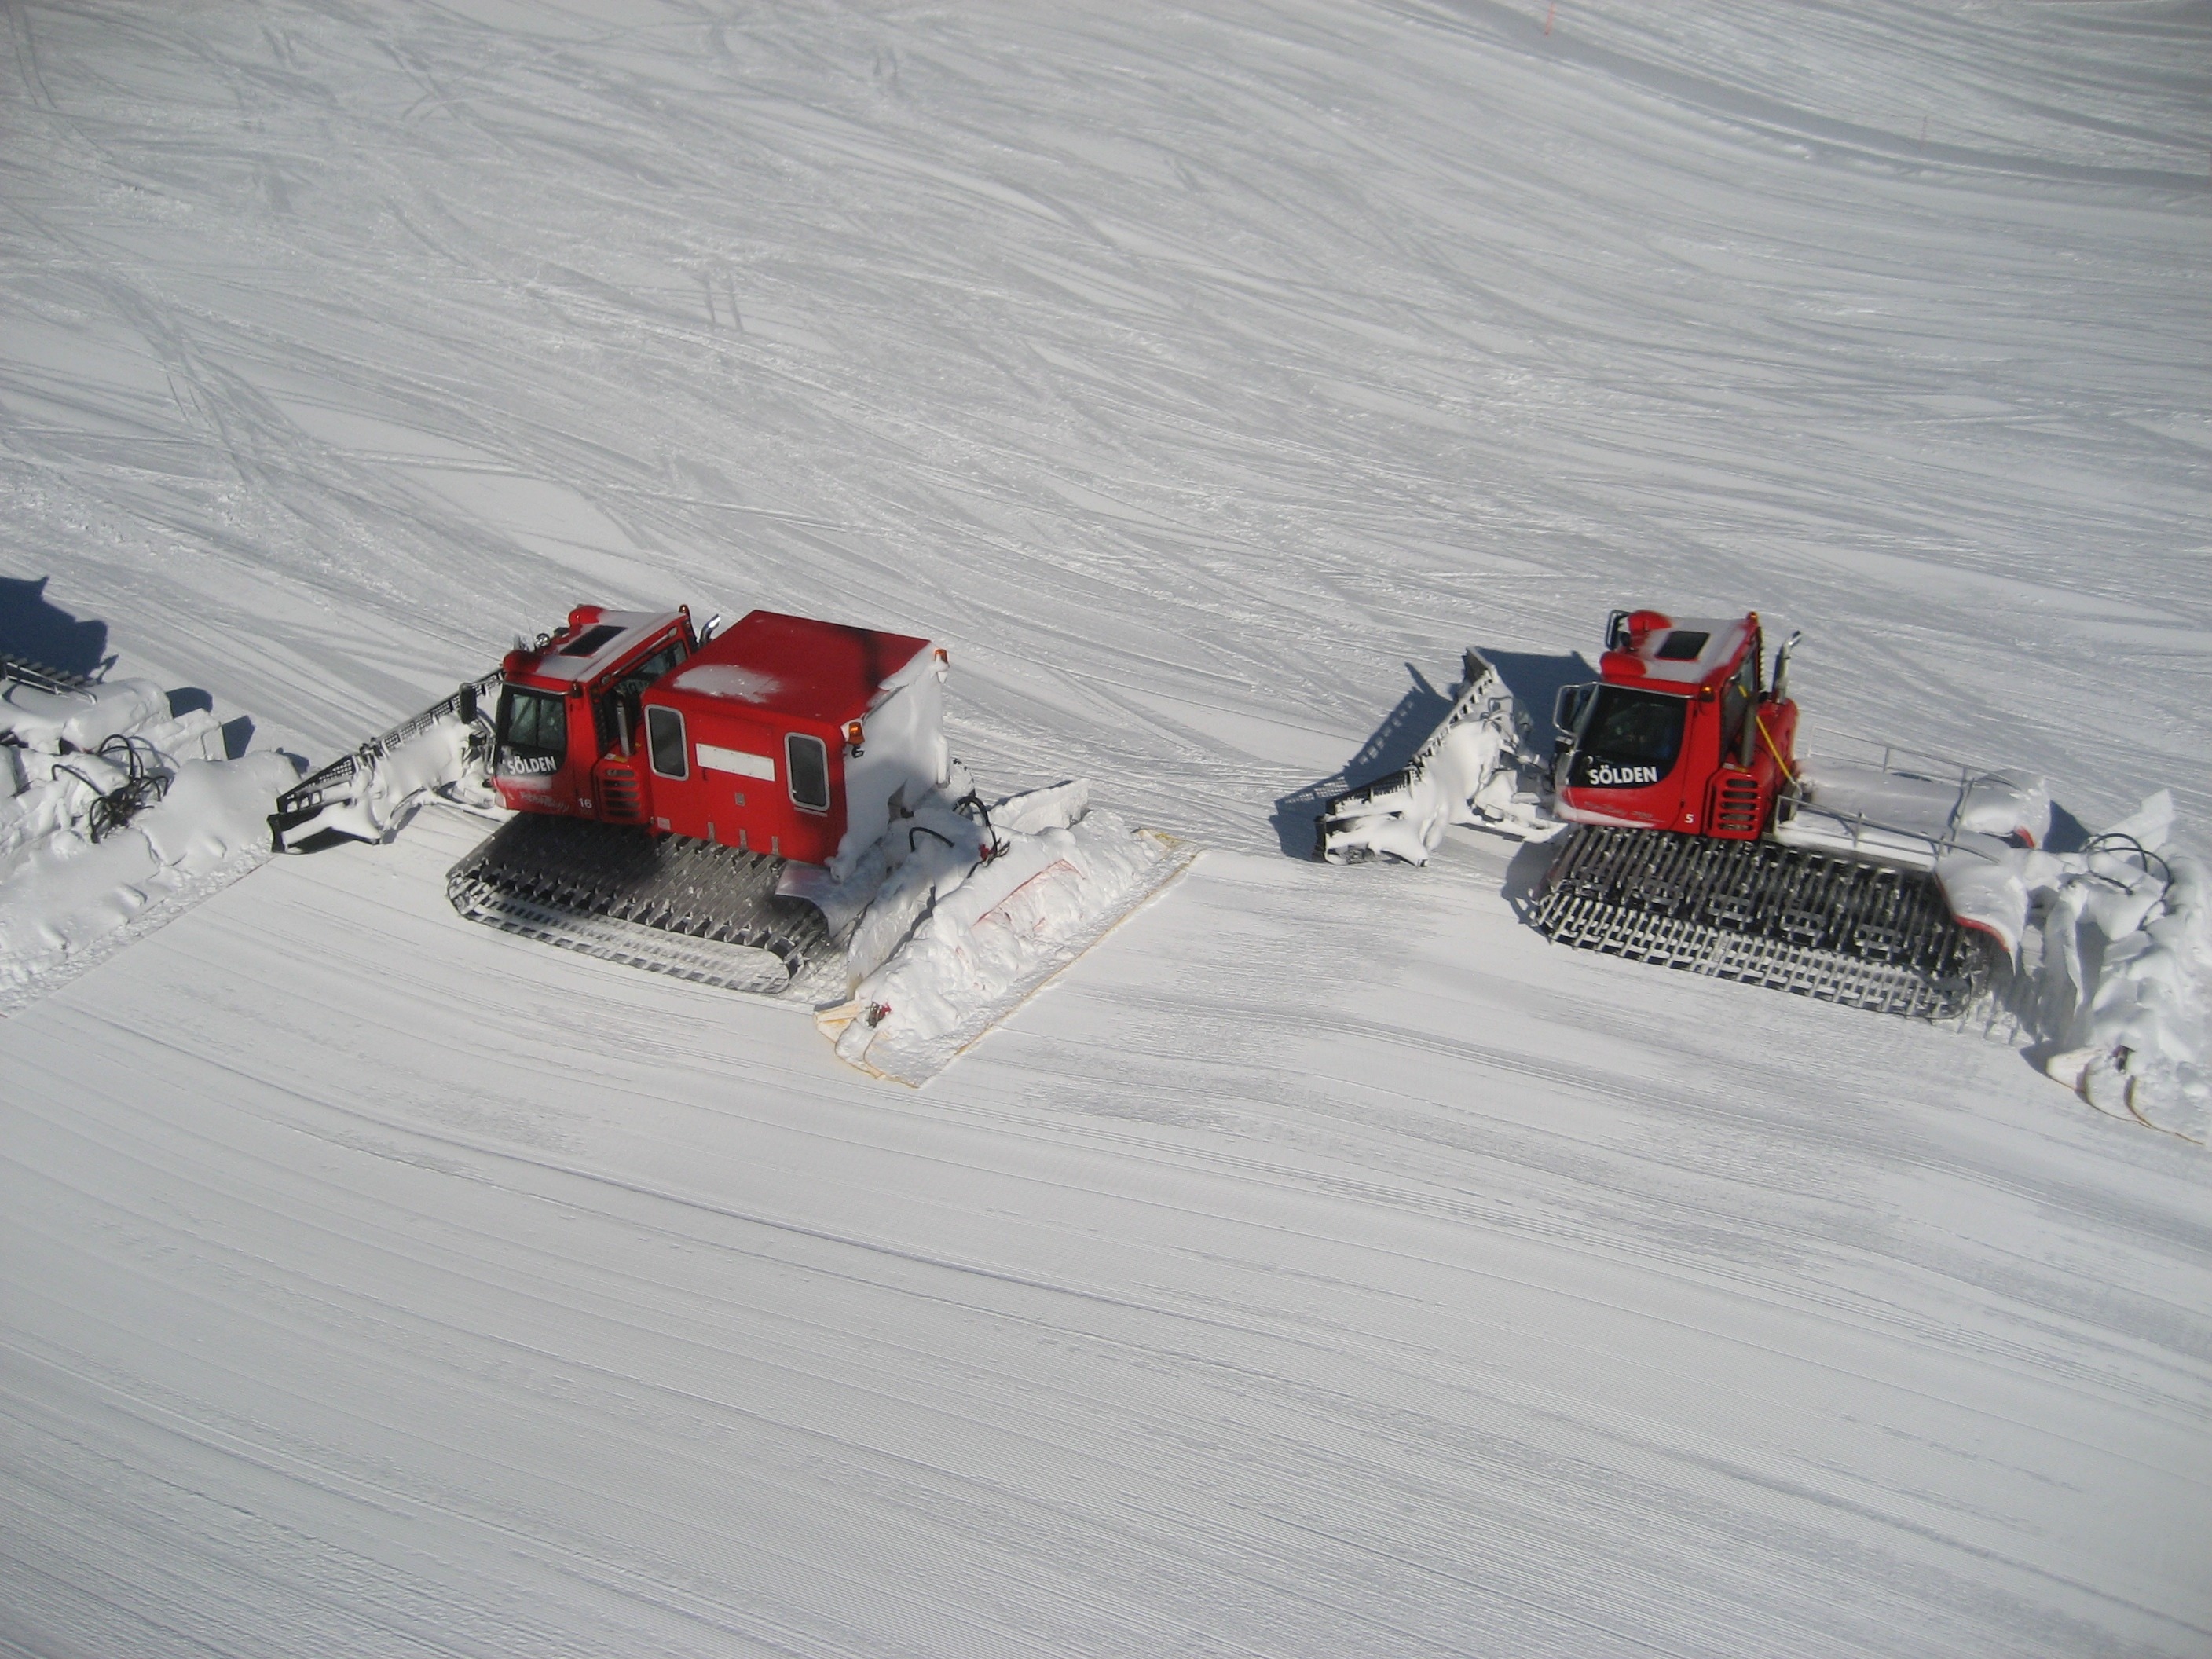 2 red snow trucks